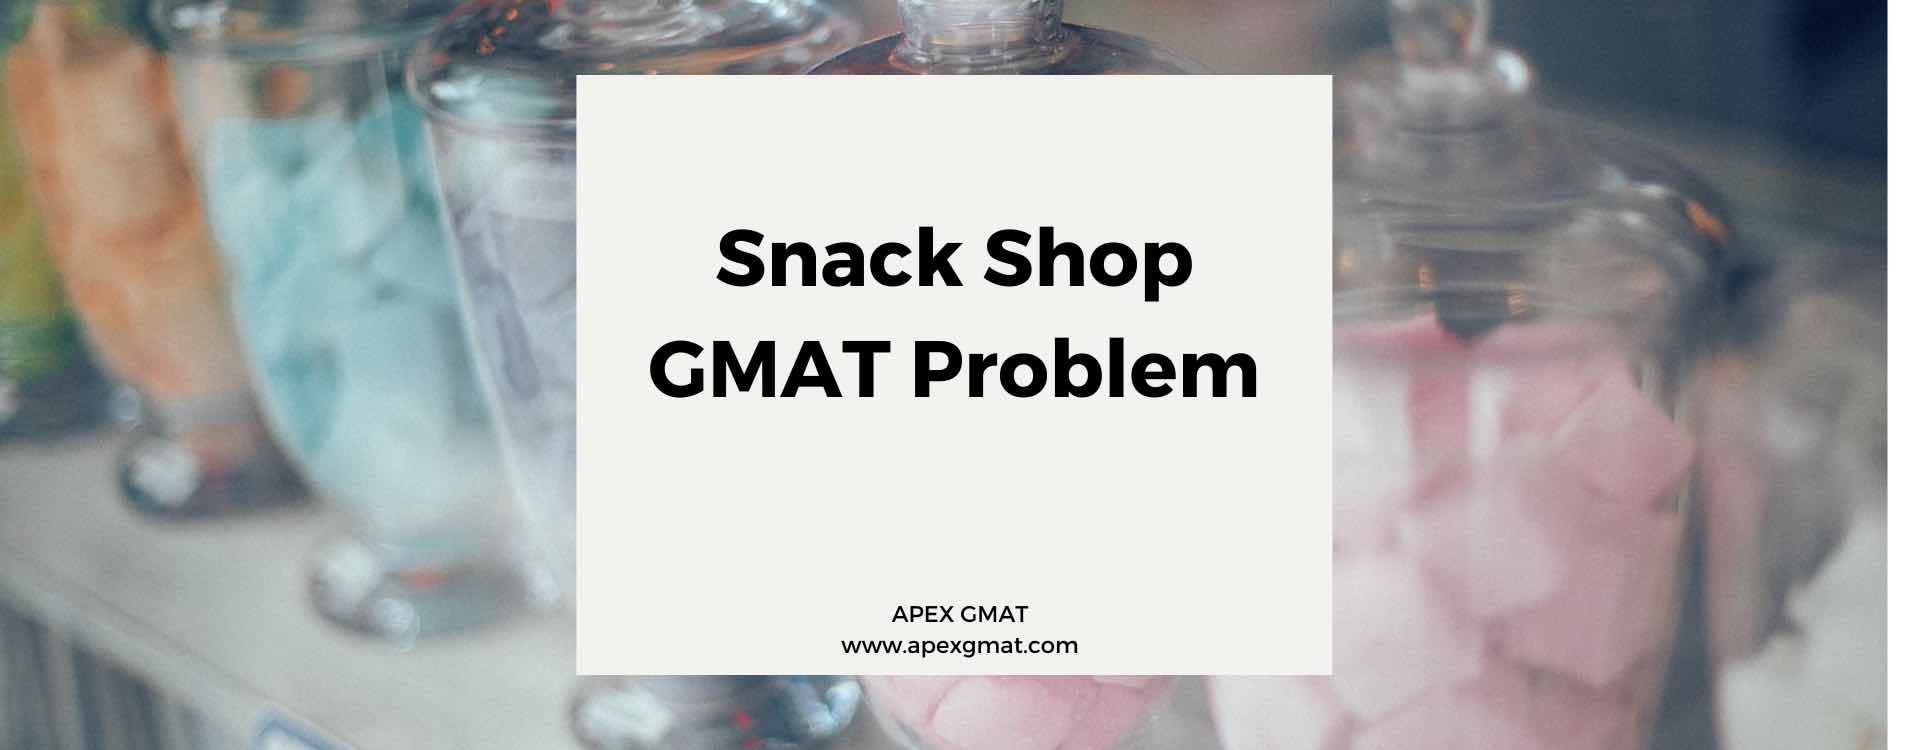 Snack Shop GMAT Problem